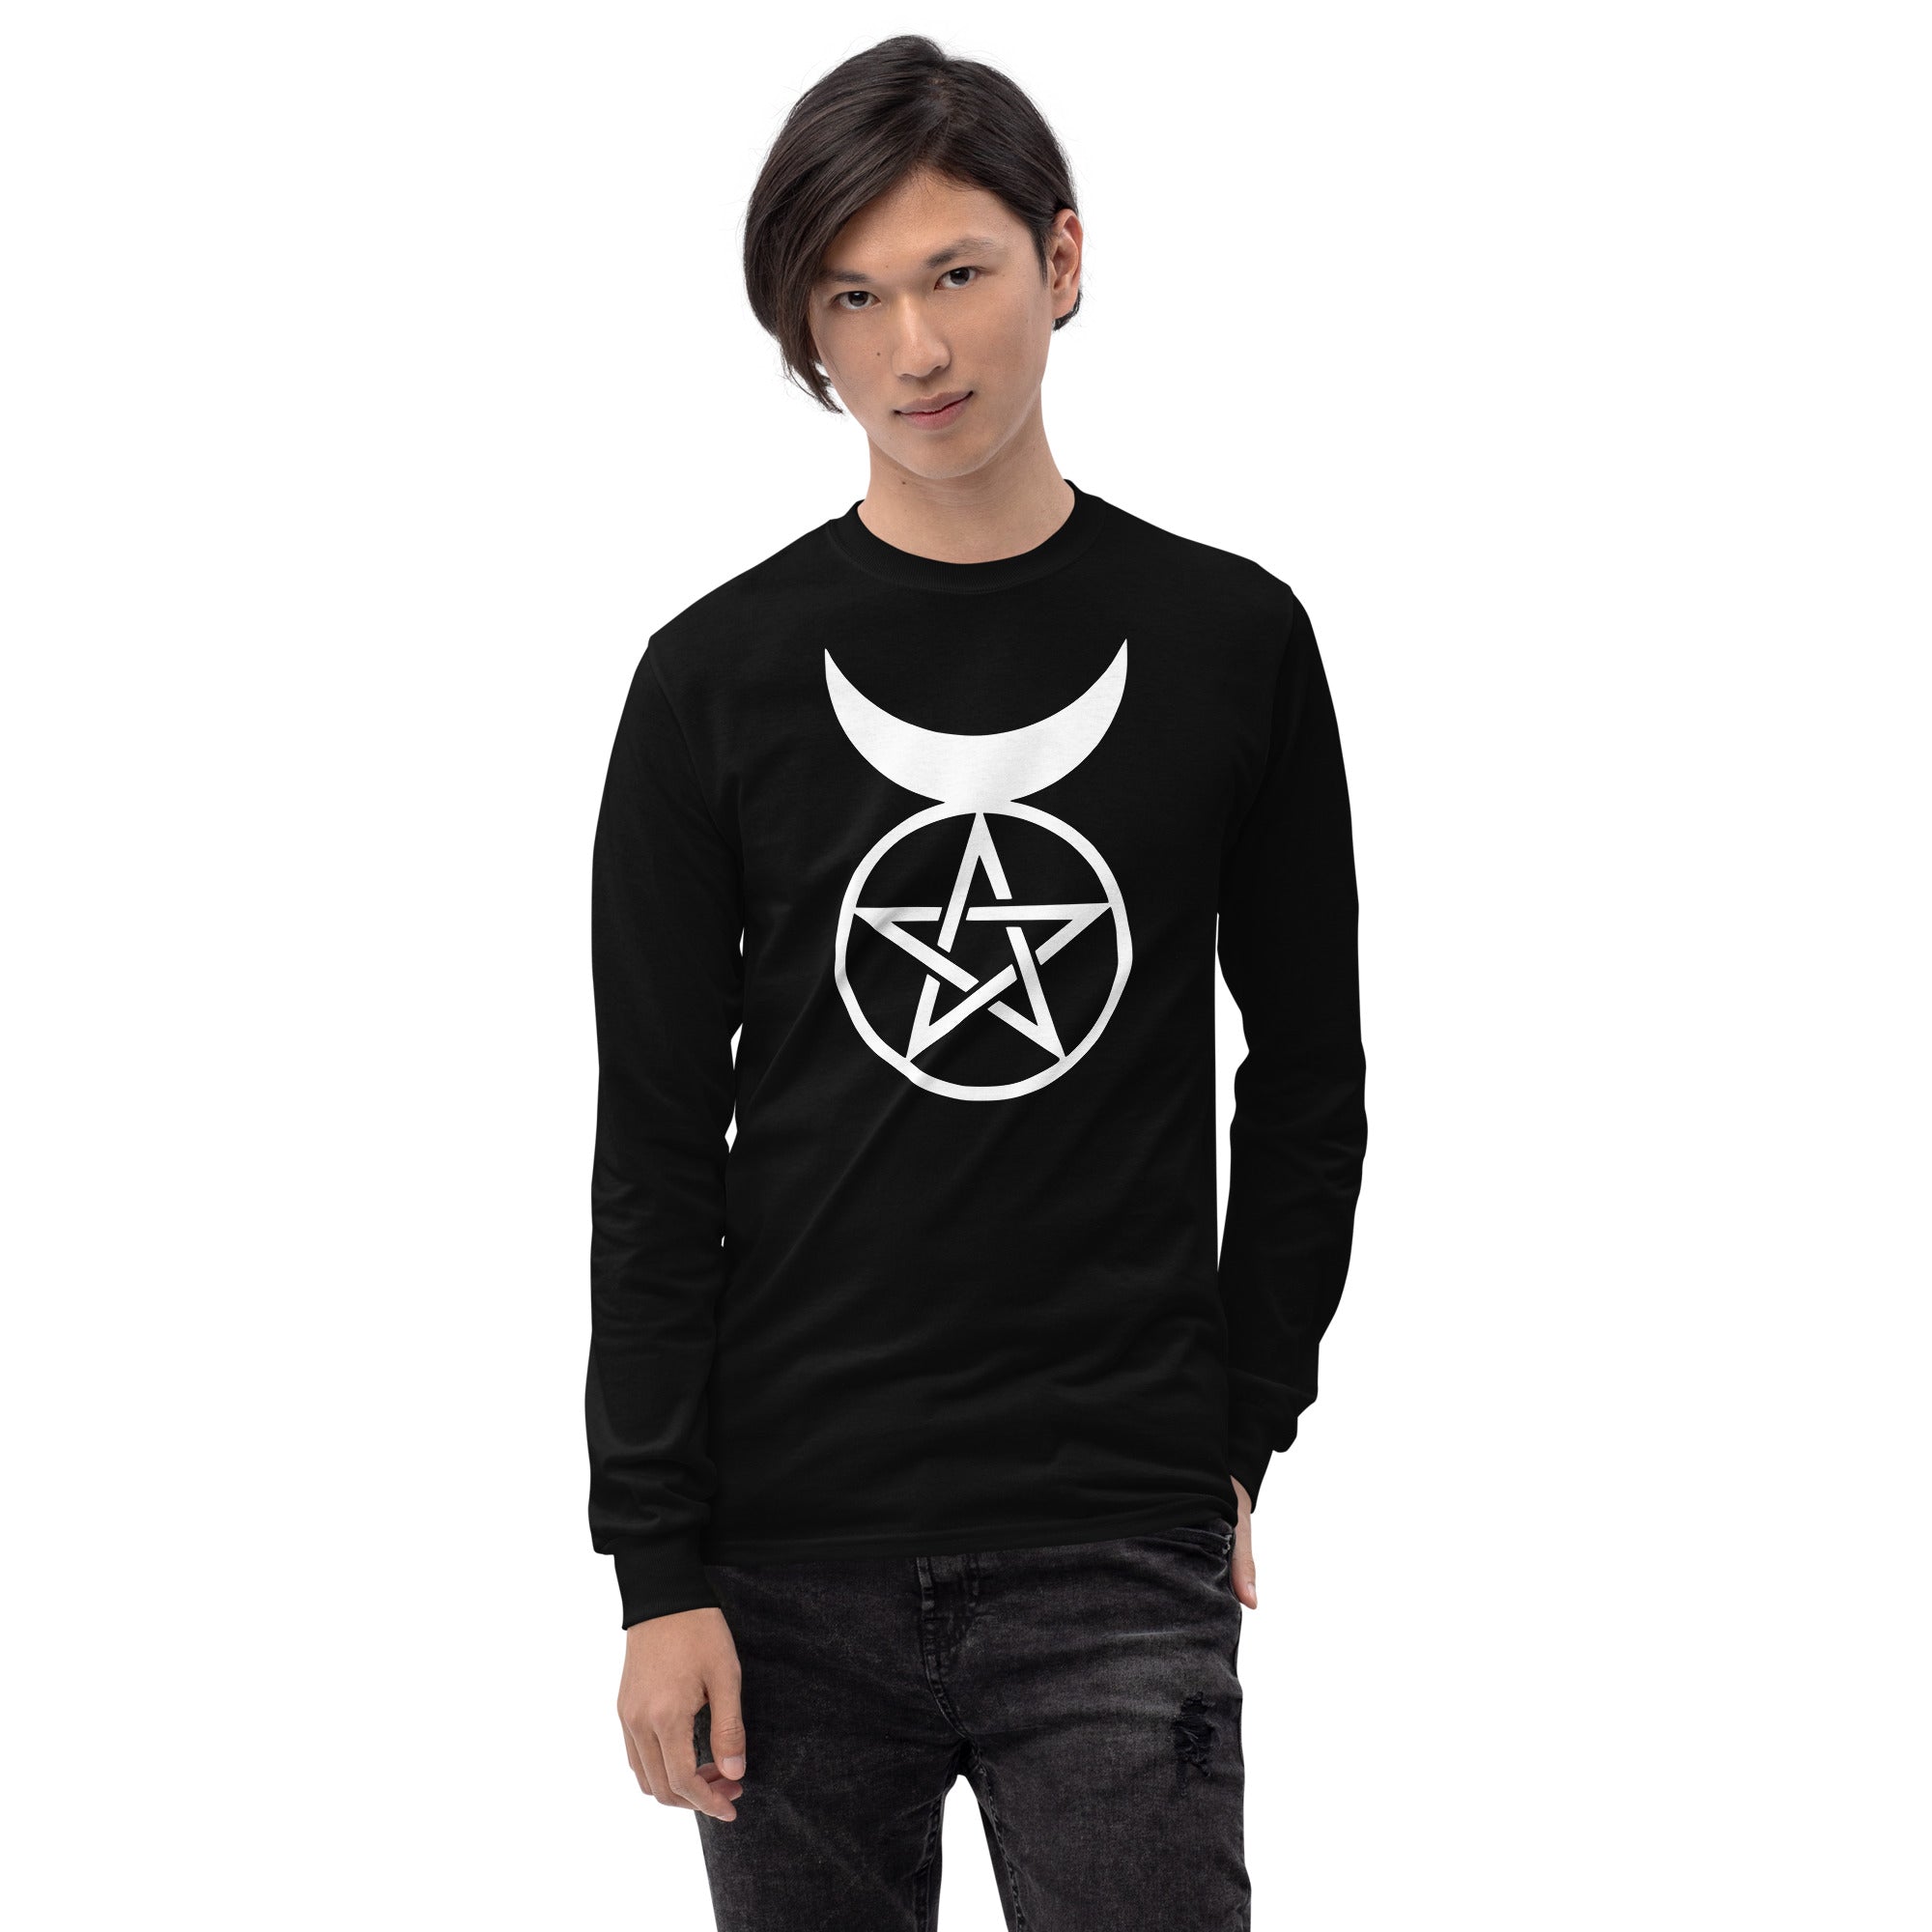 The Horned God Wicca Neopaganism Symbol Long Sleeve Shirt